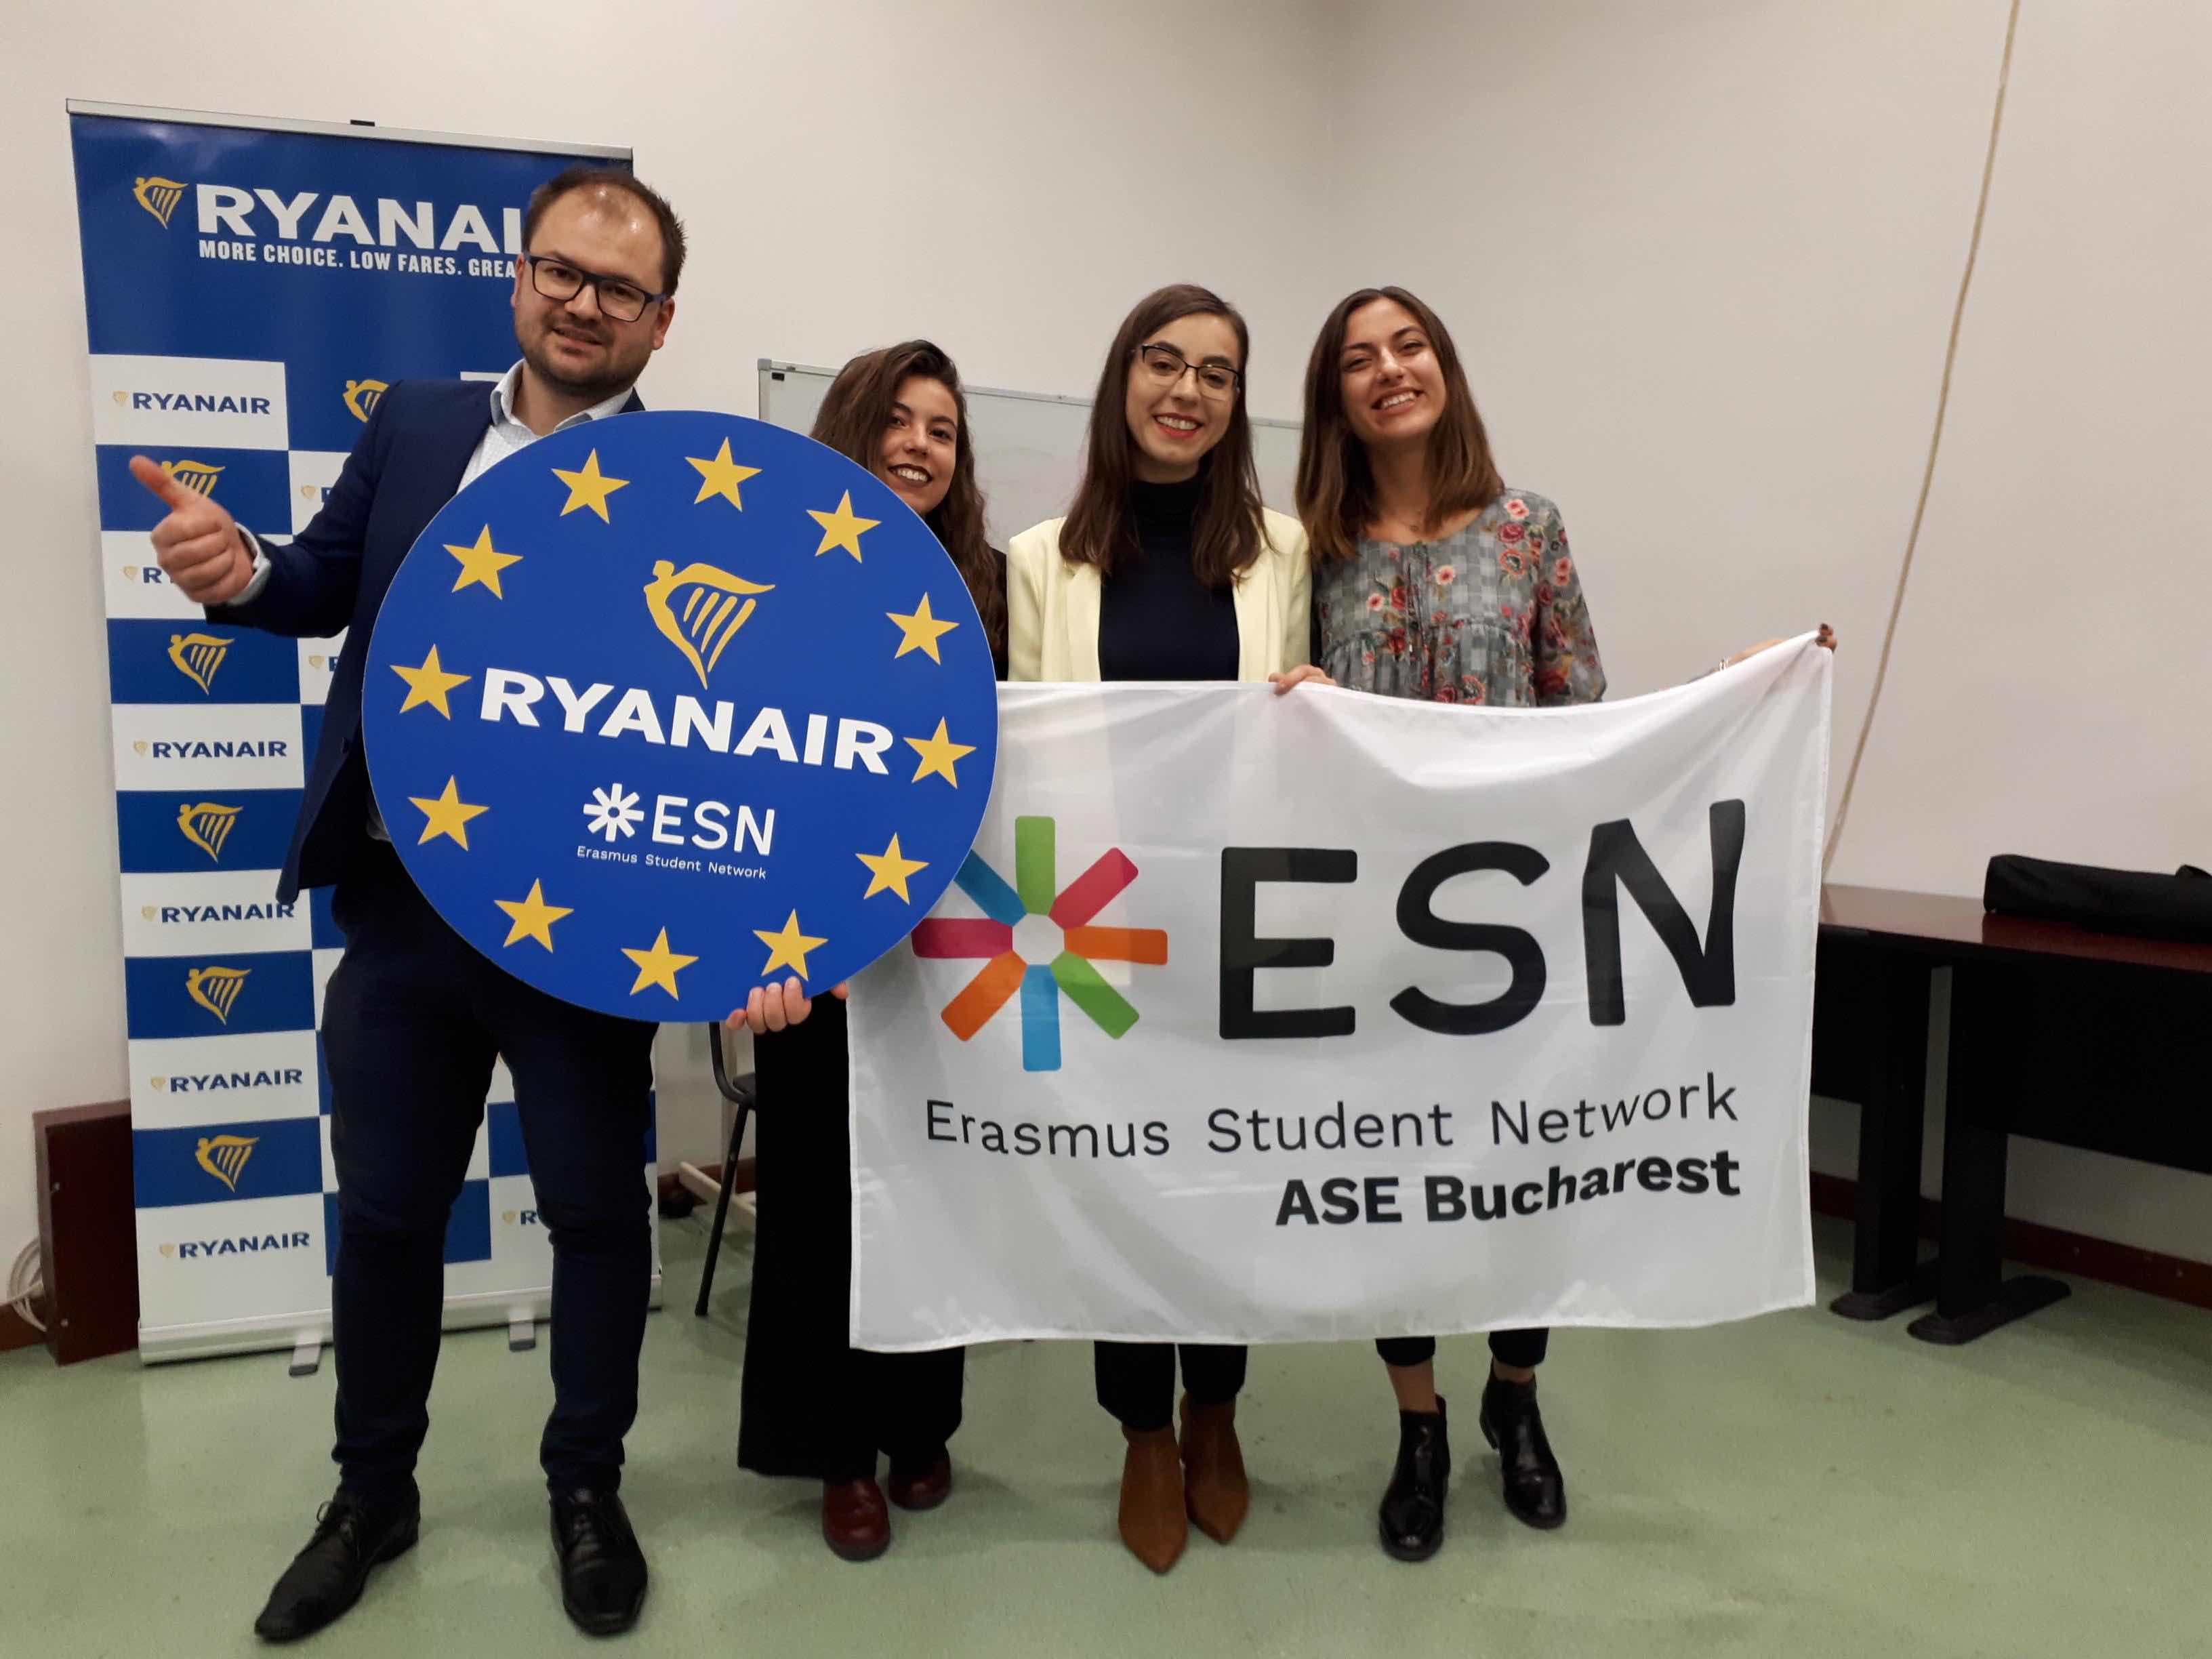 Ryanair Celebrates Over 300,000 Erasmus Student Network Bookings